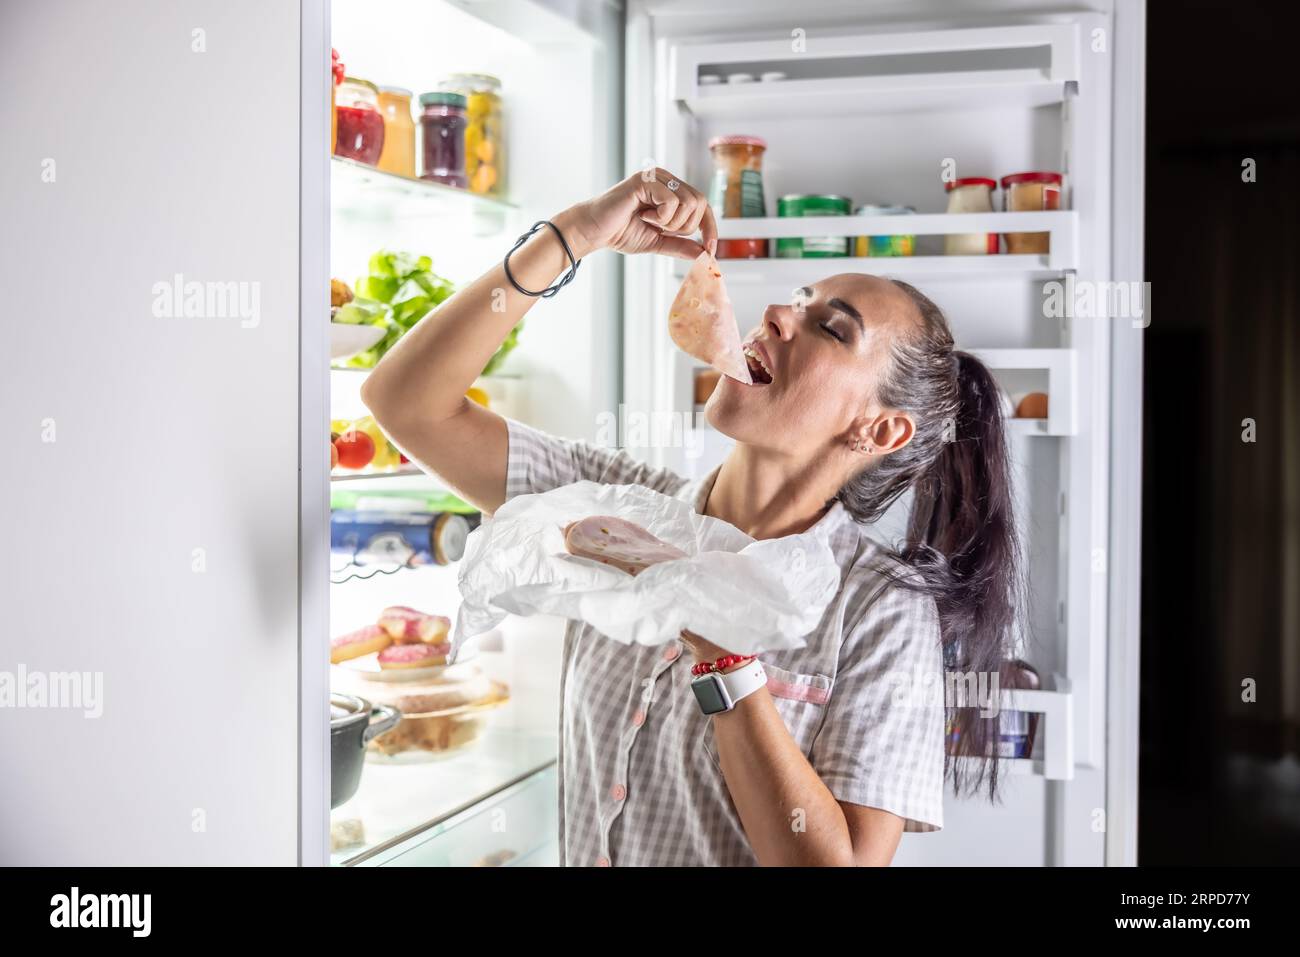 Very hungry woman in pajamas enjoying ham at night by the fridge. Stock Photo